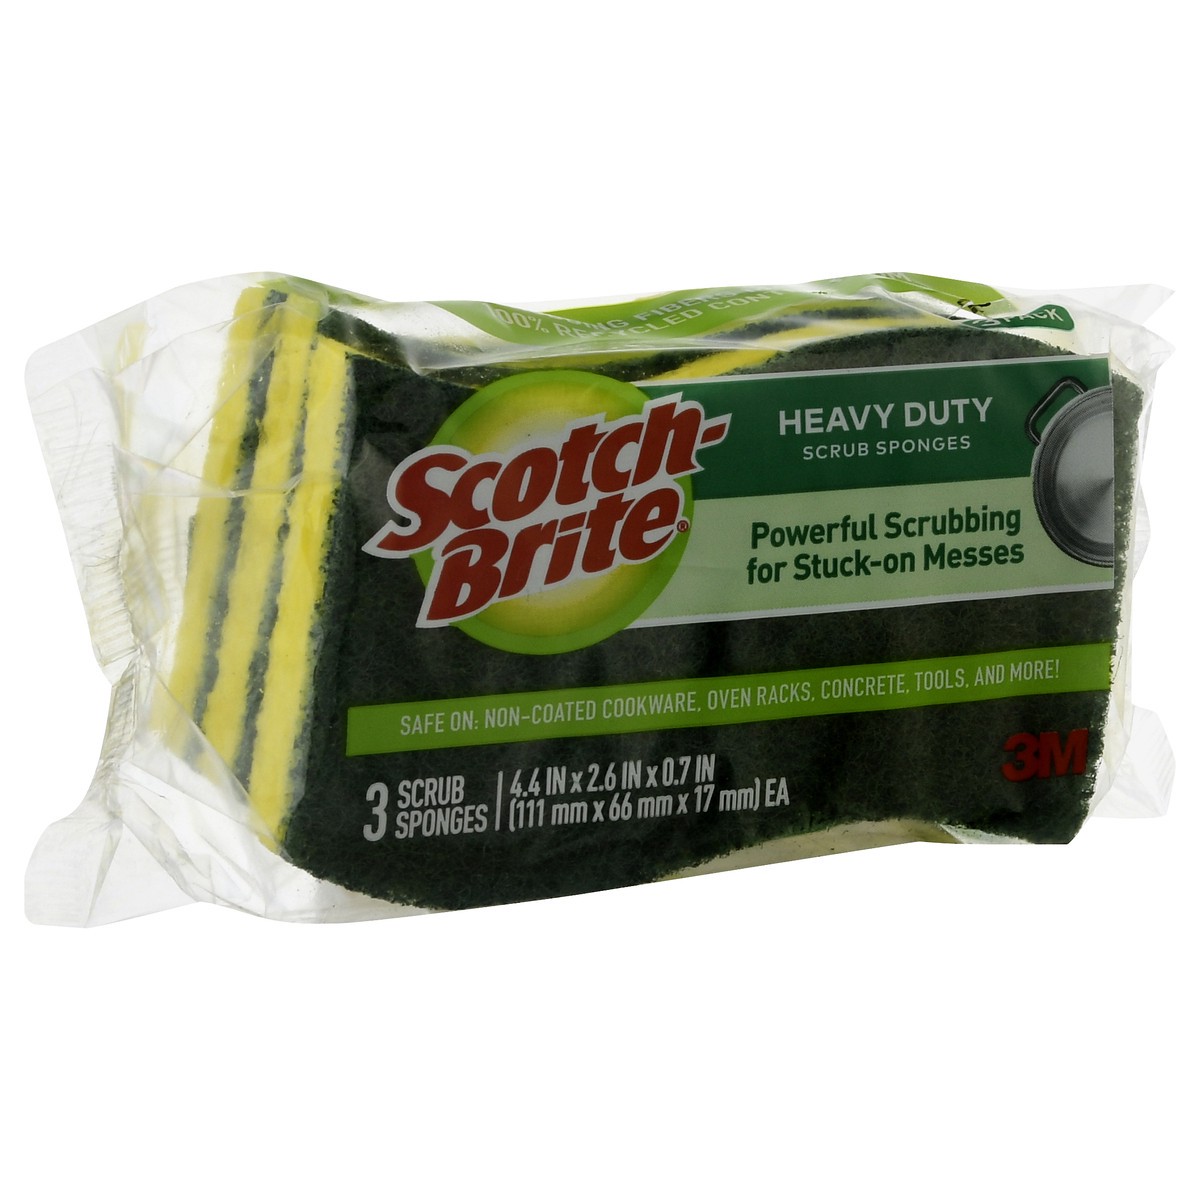 Scotch-brite Heavy Duty Scrub Sponges - 3ct : Target